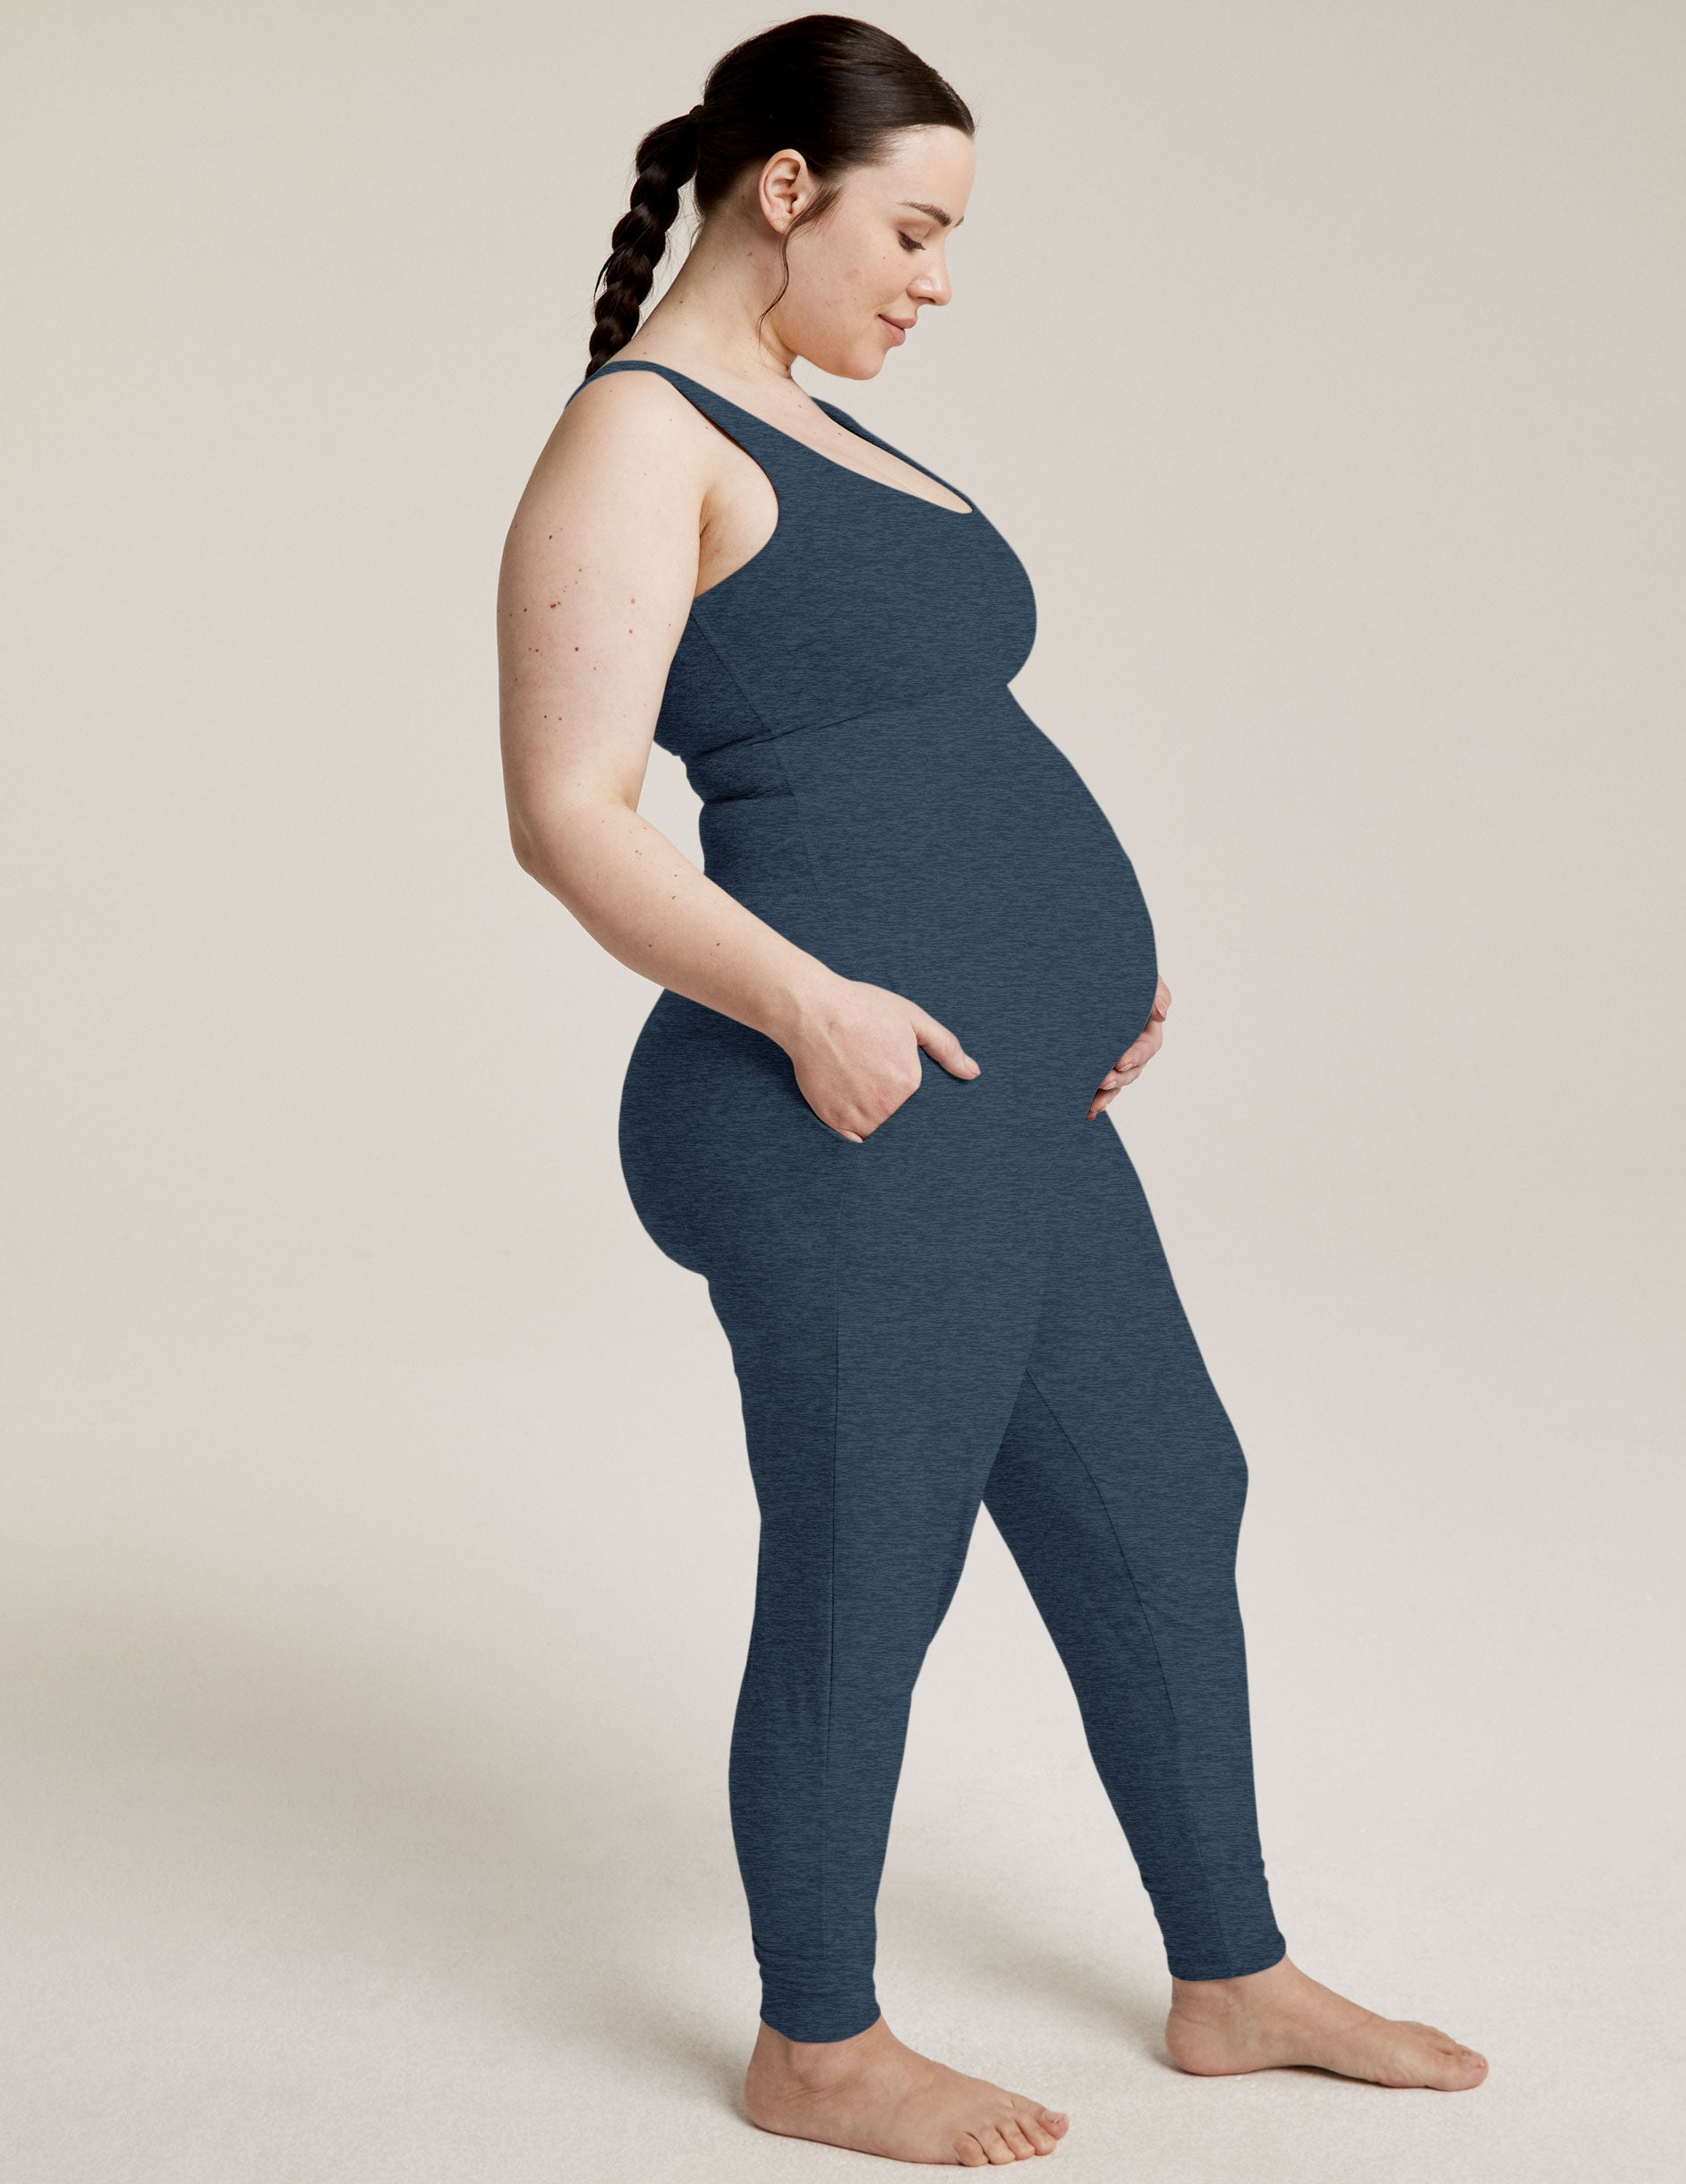 Spacedye Grow In Comfort Maternity Jumpsuit